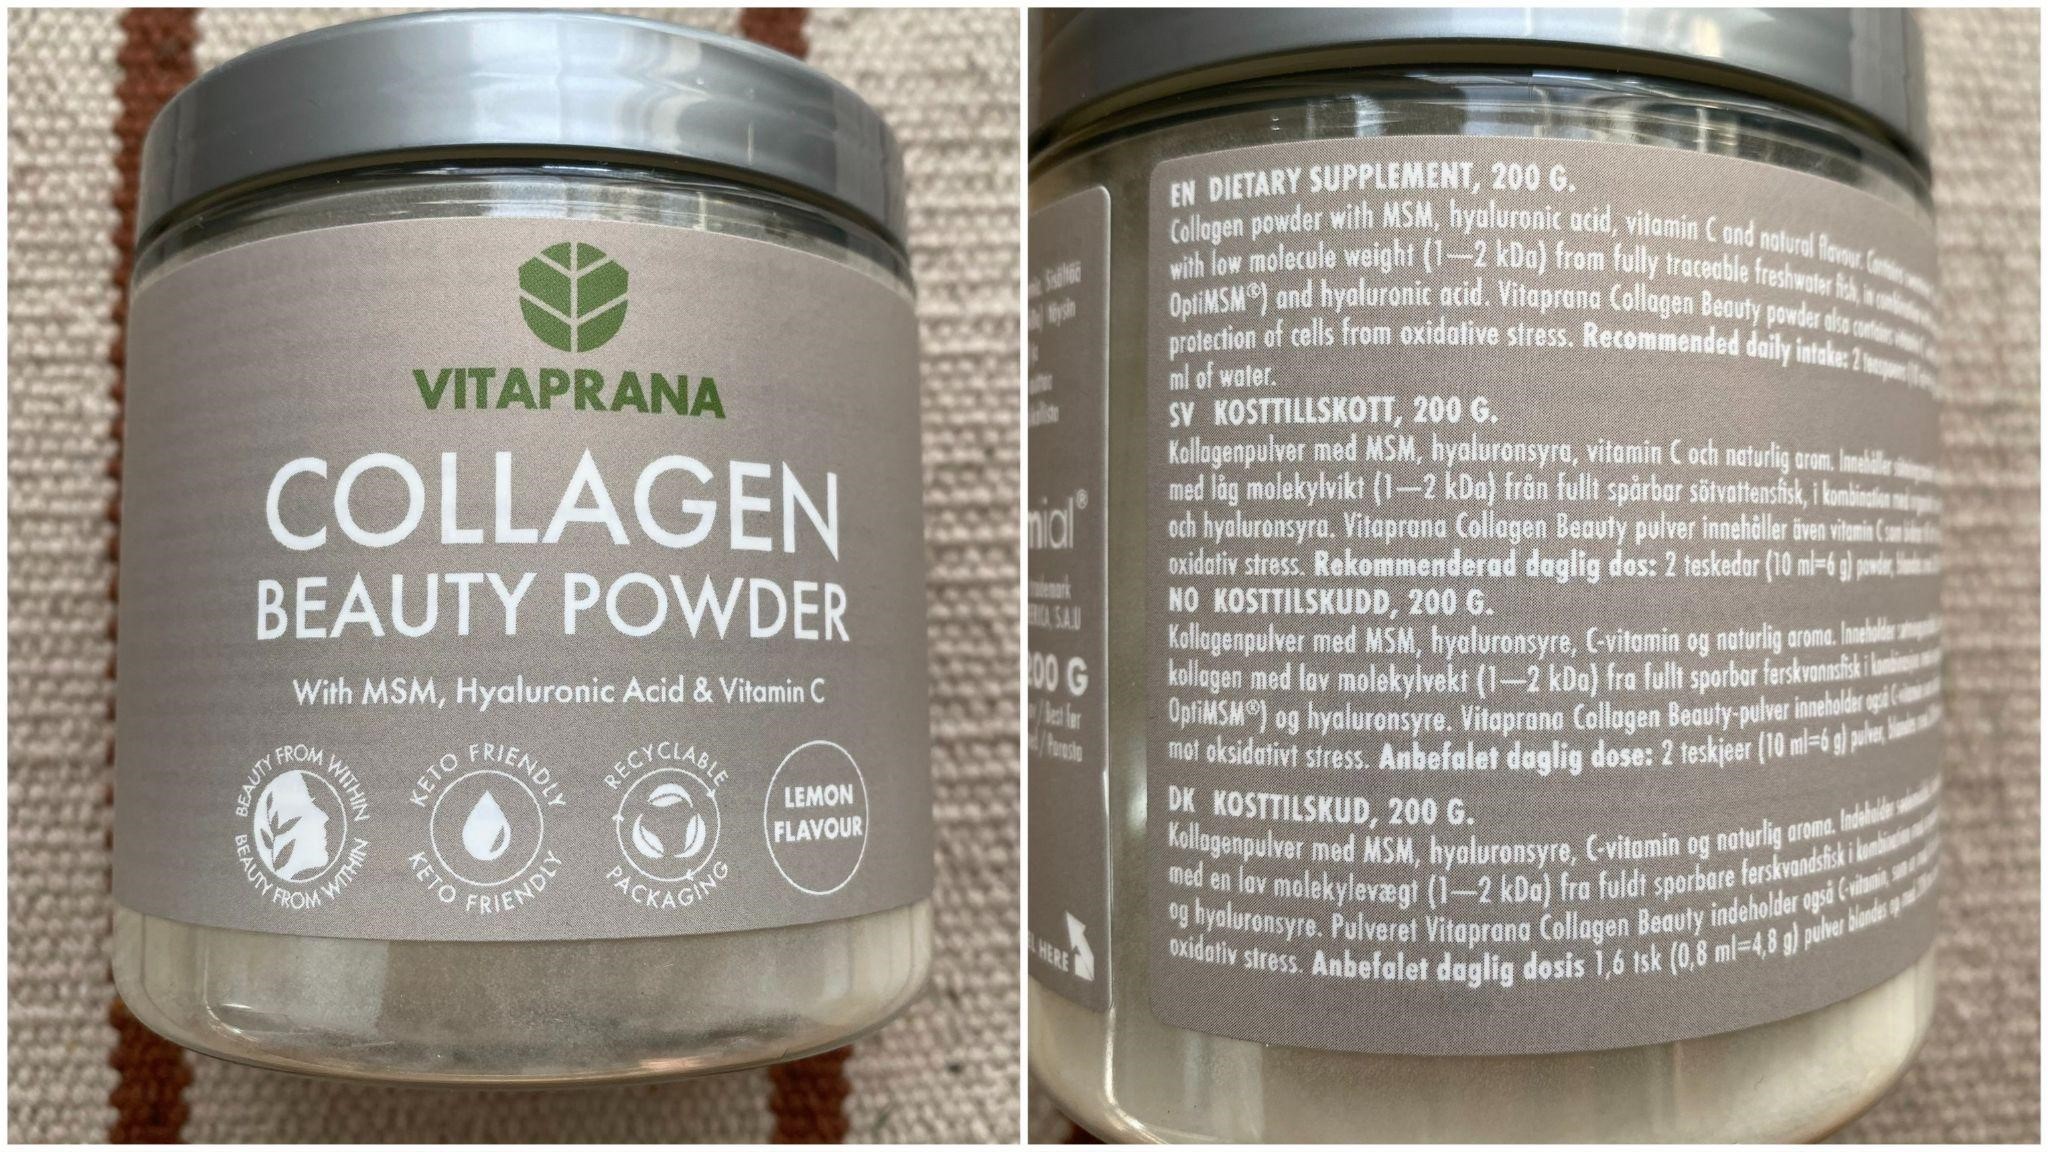 Vitaprana Collagen Beauty Powder